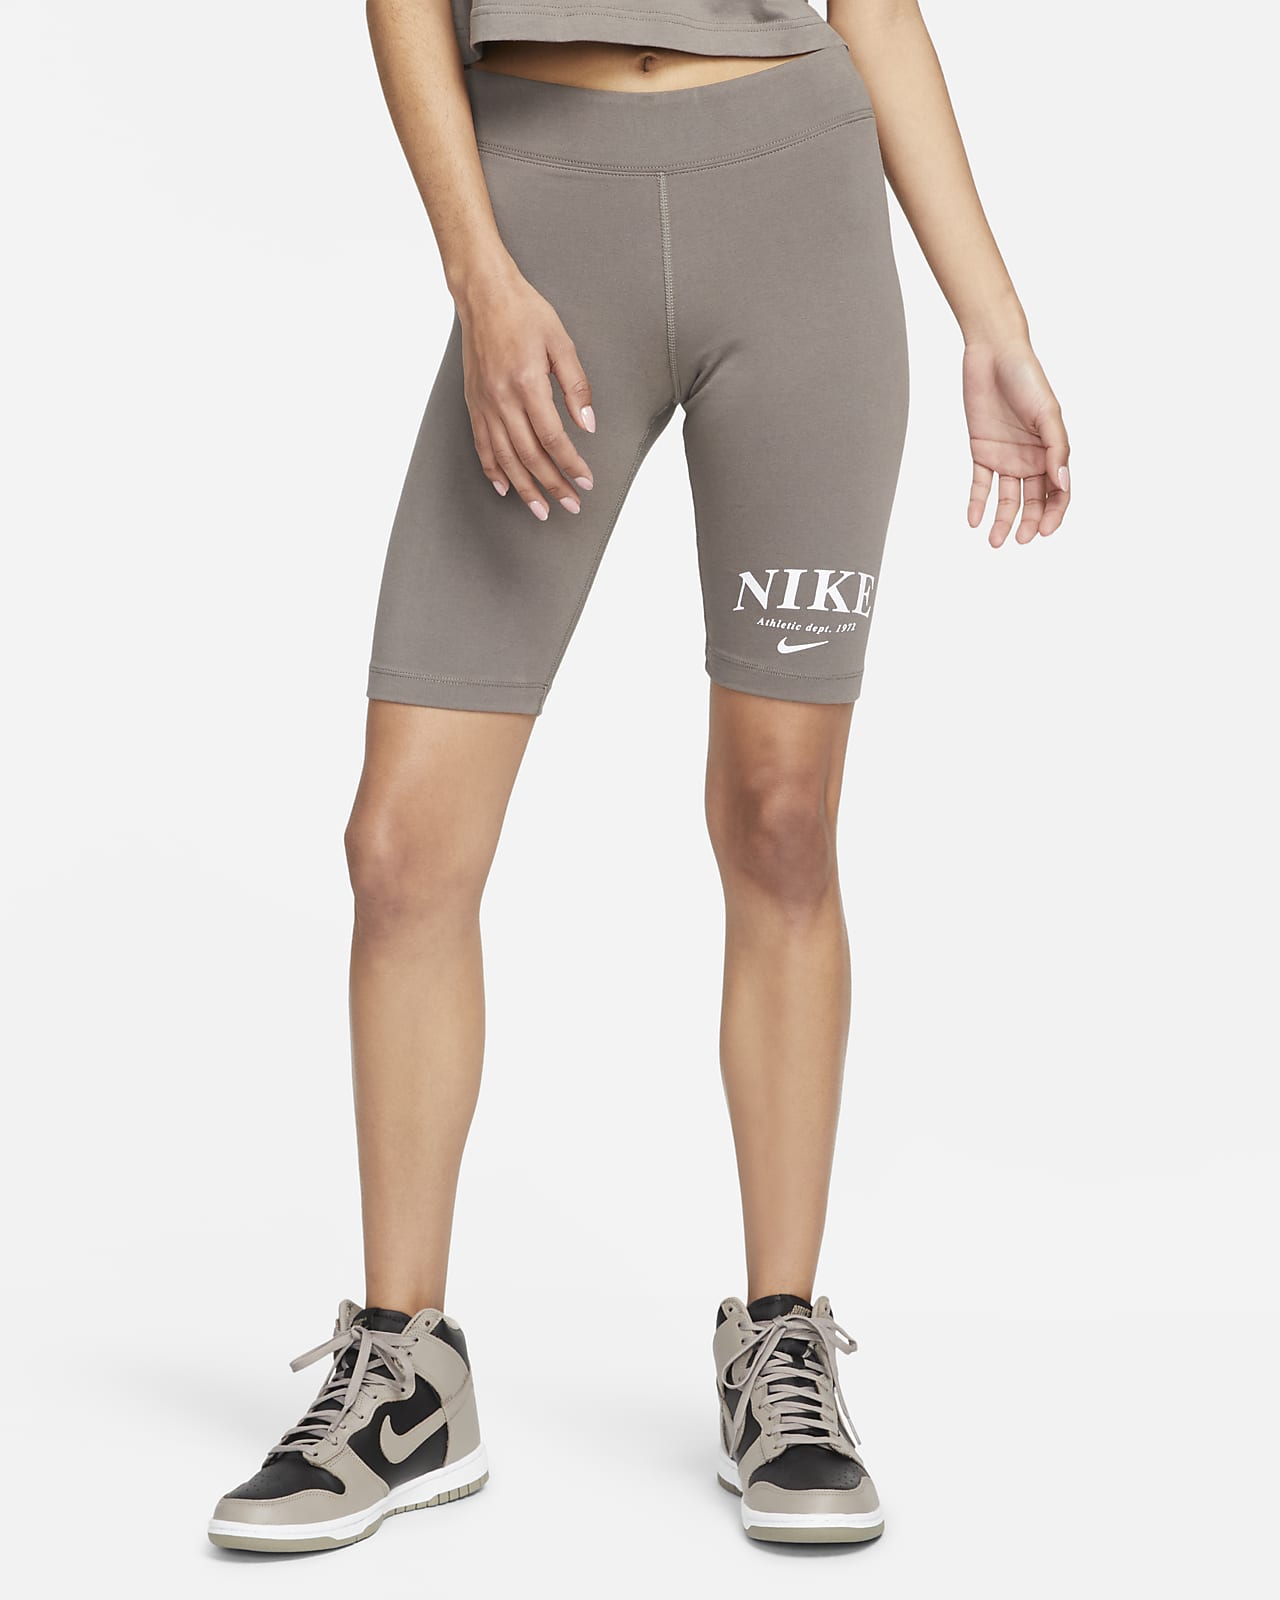 Intenso grua judío Nike Sportswear Women's Mid-Rise Bike Shorts. Nike.com